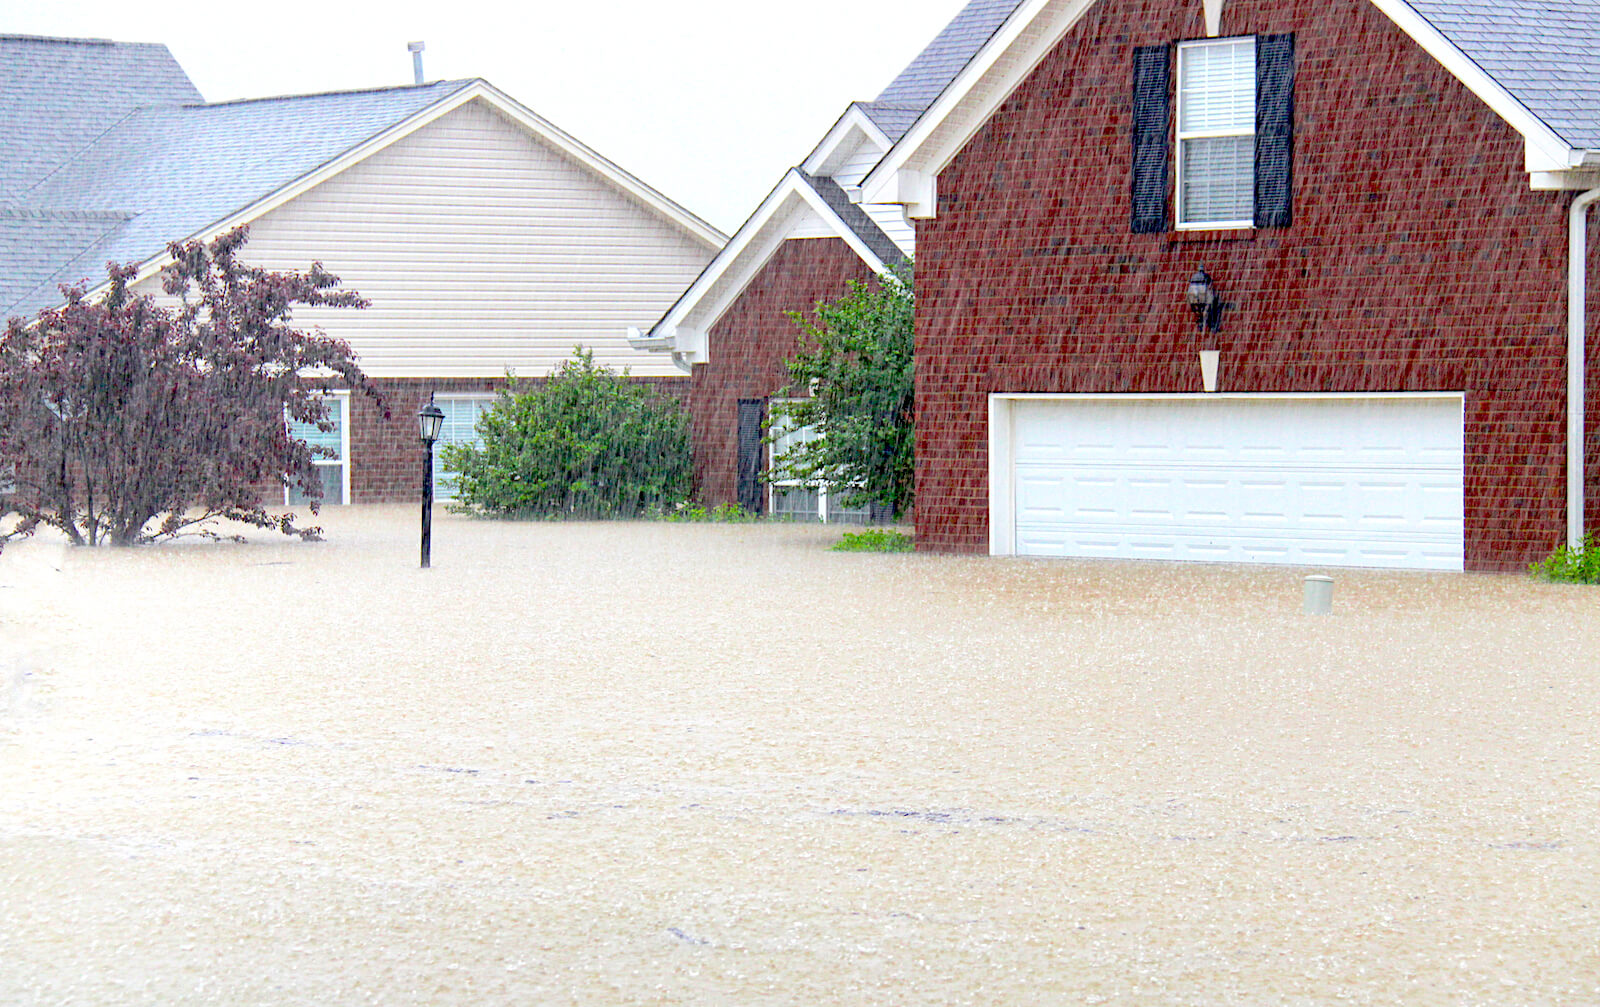 Flooding Hurricane Insurance Claim